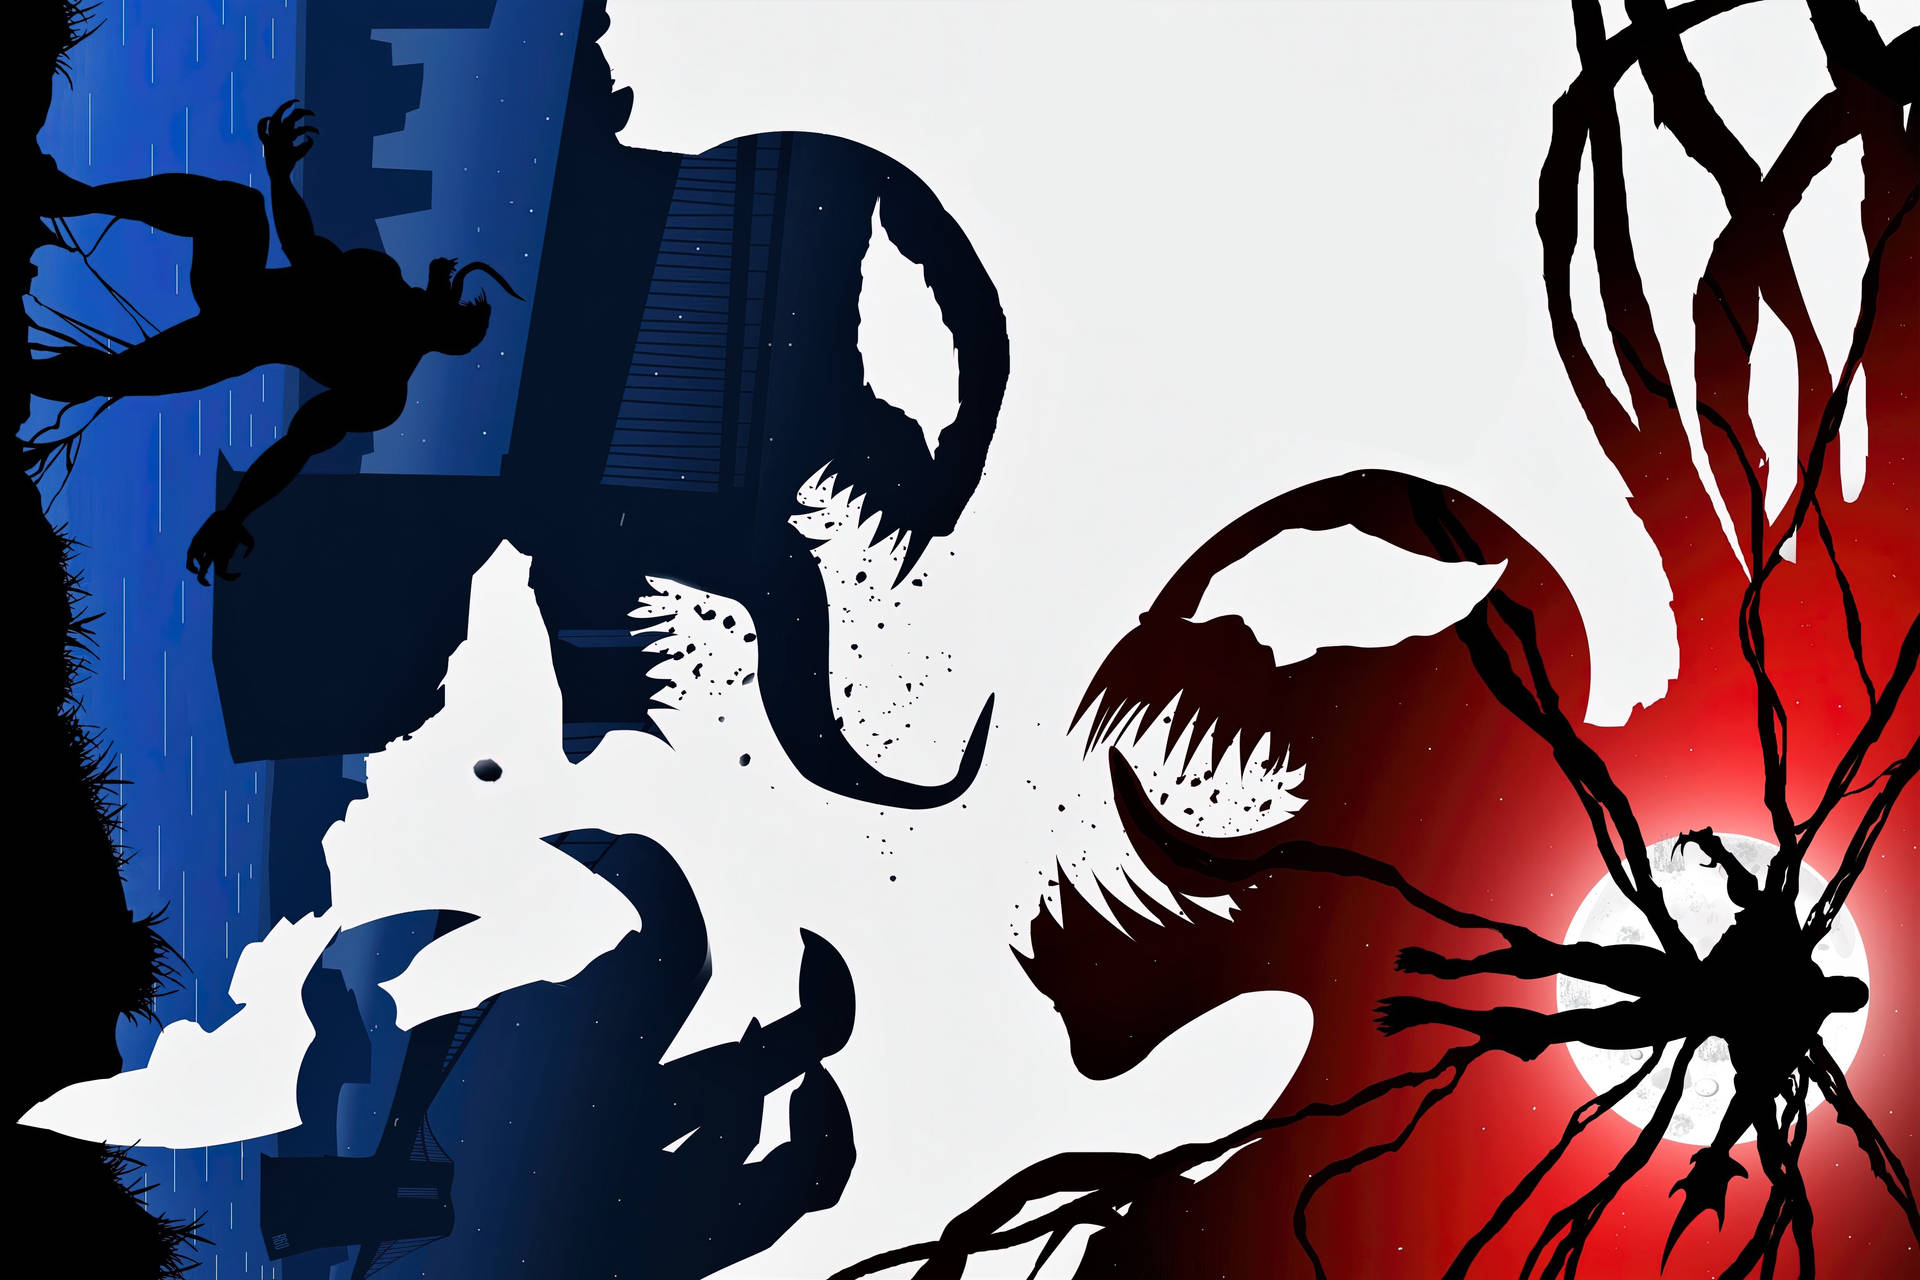 Venom And Carnage 4k Wallpaper